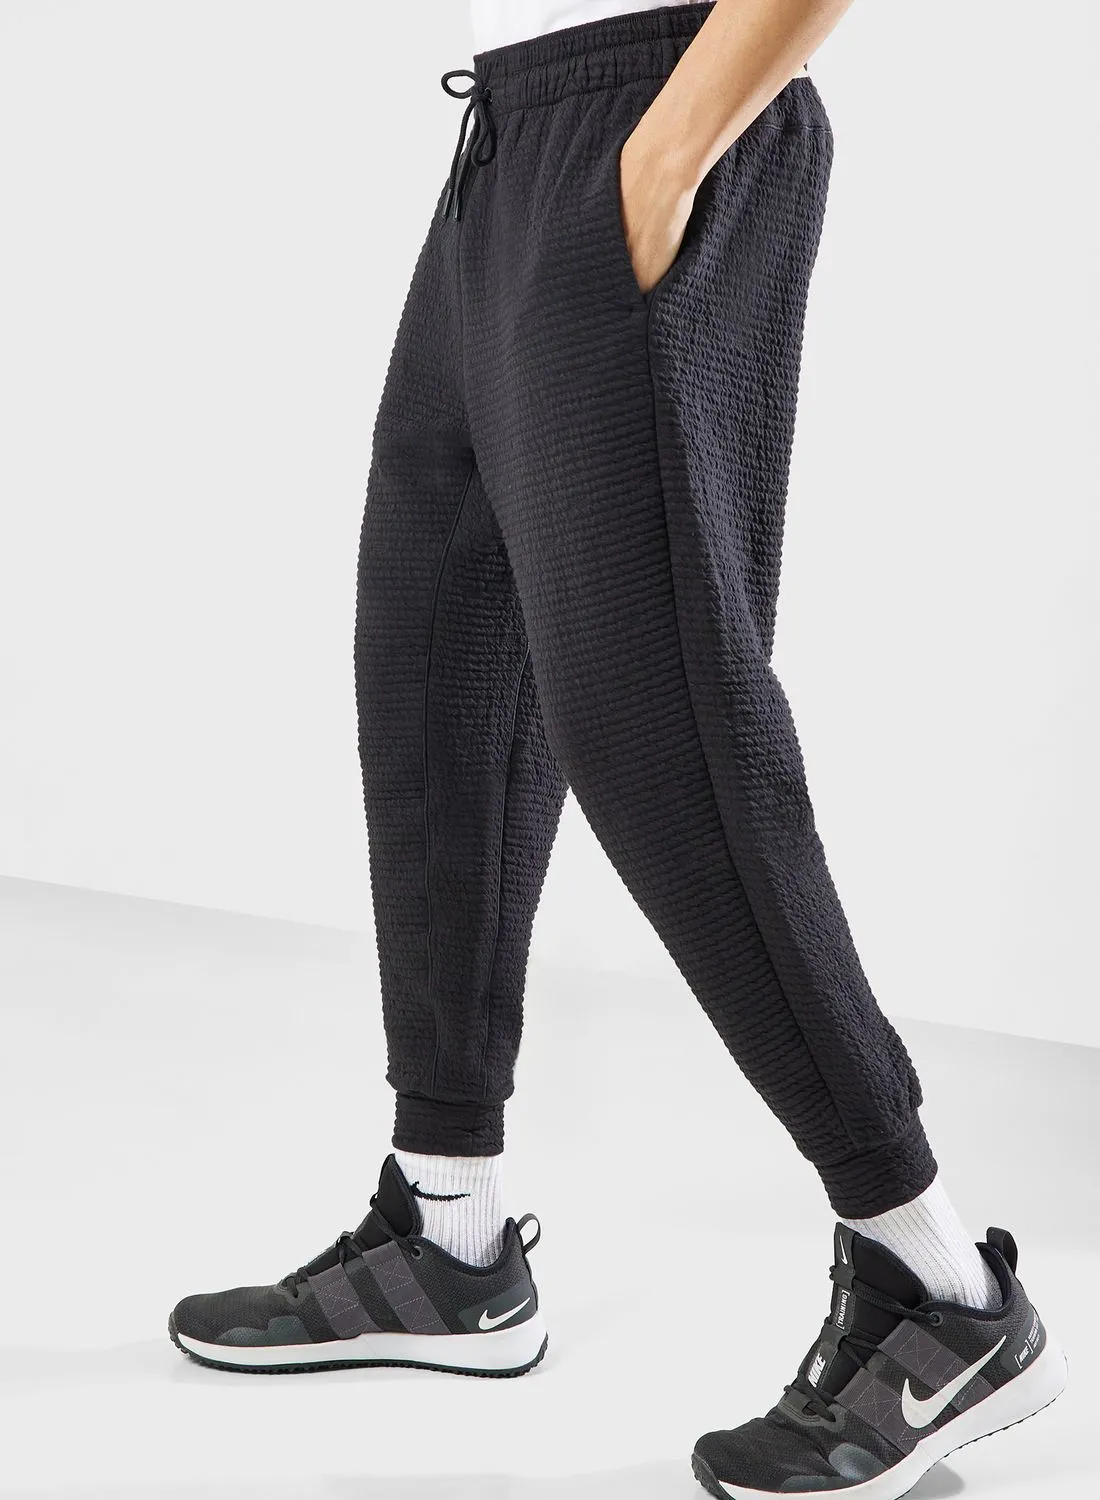 Nike Dri-Fit Texture Pants